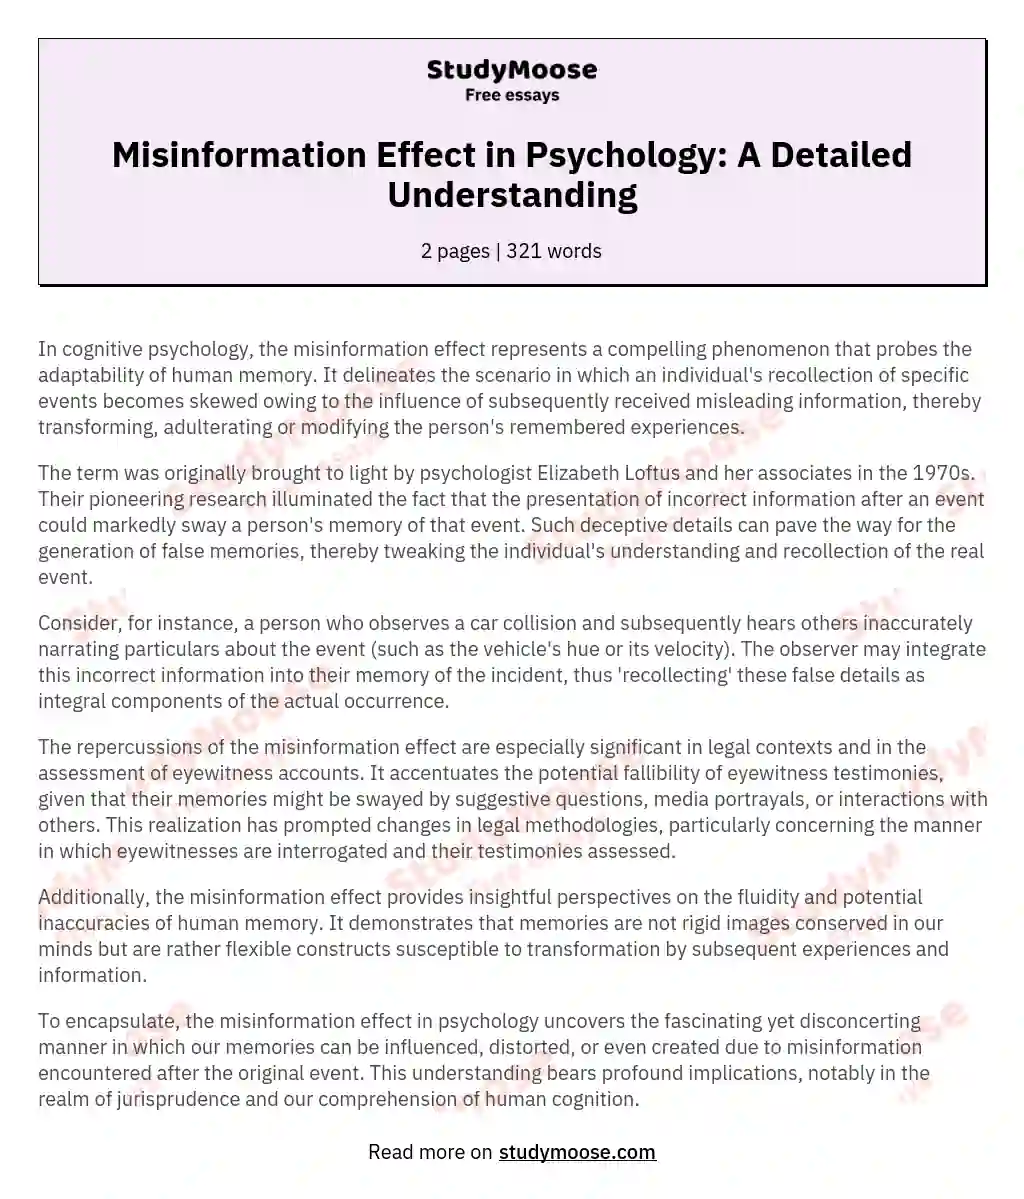 Misinformation Effect in Psychology: A Detailed Understanding essay